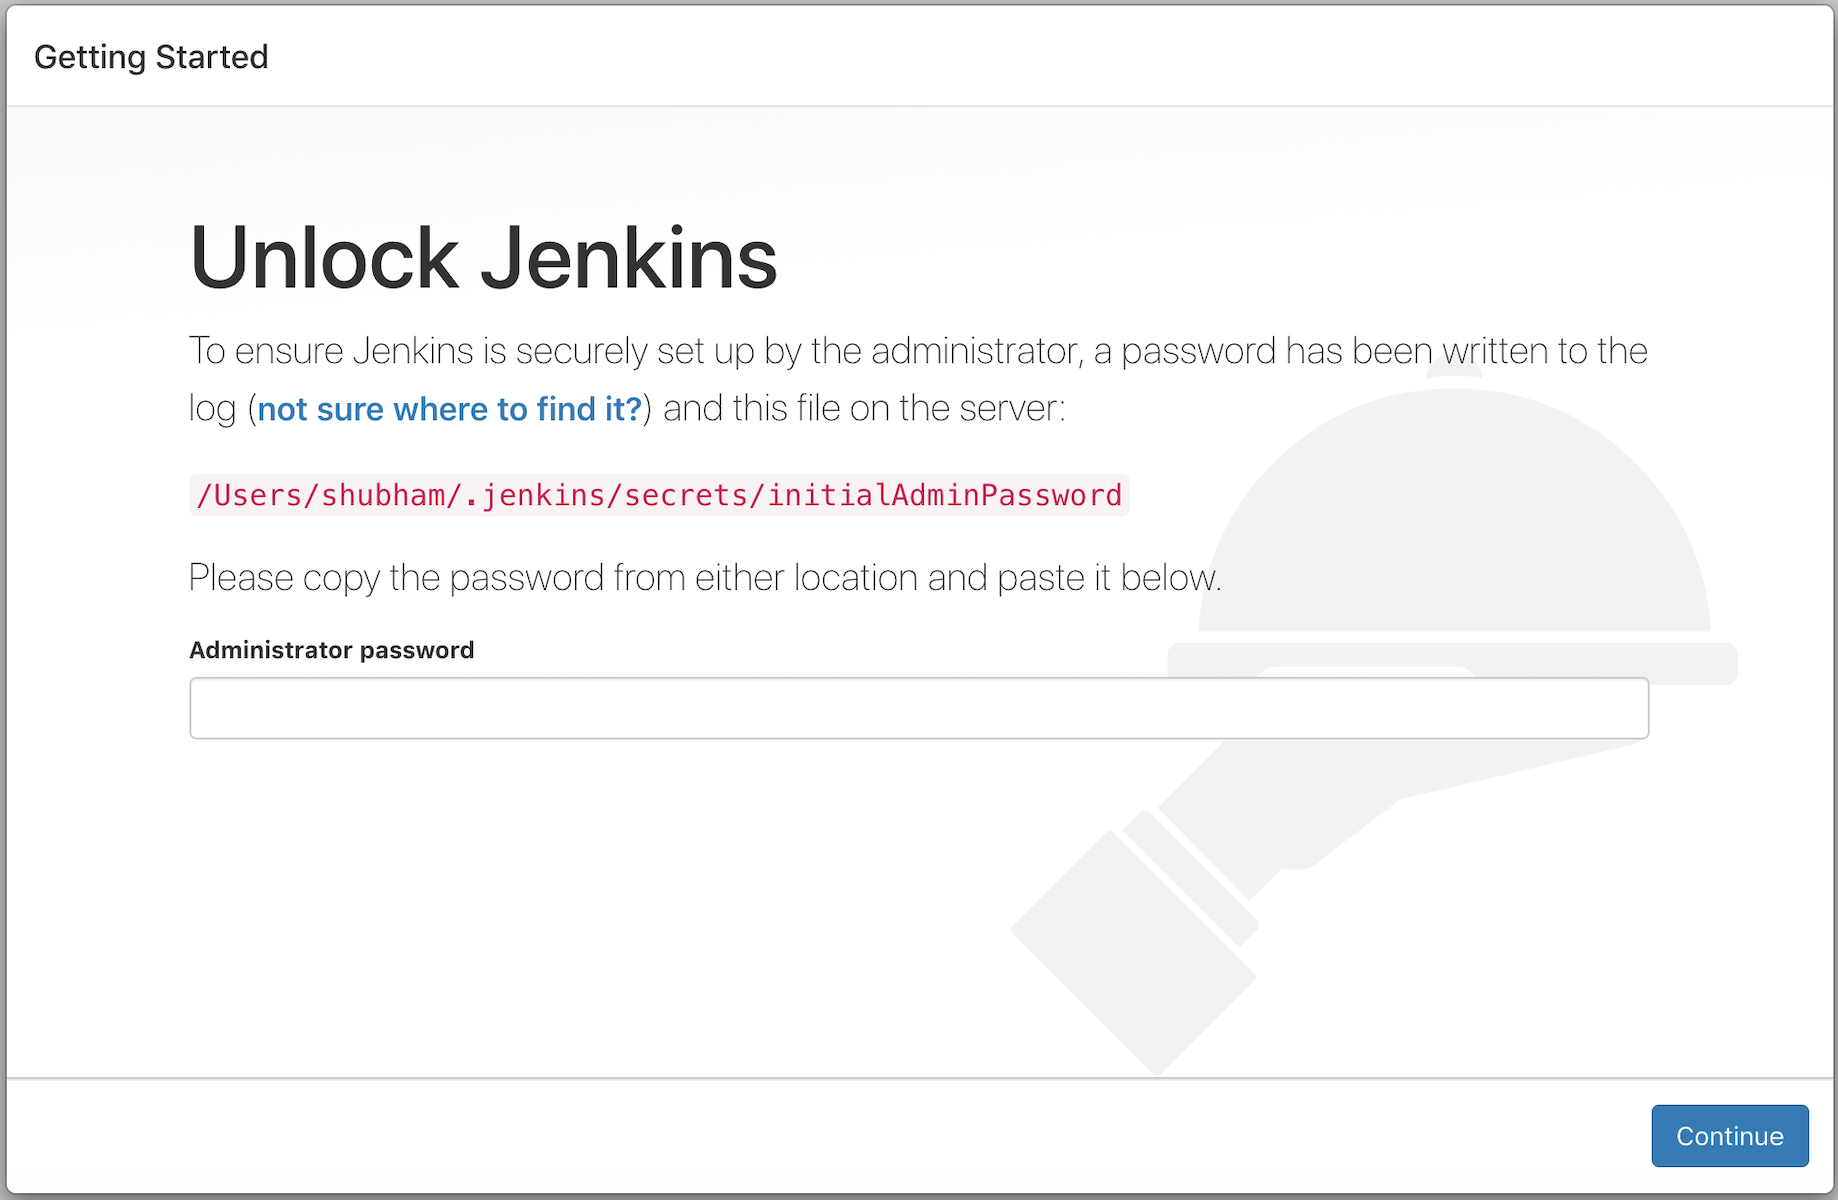 idkblogs.com: Get the password to start the jenkins